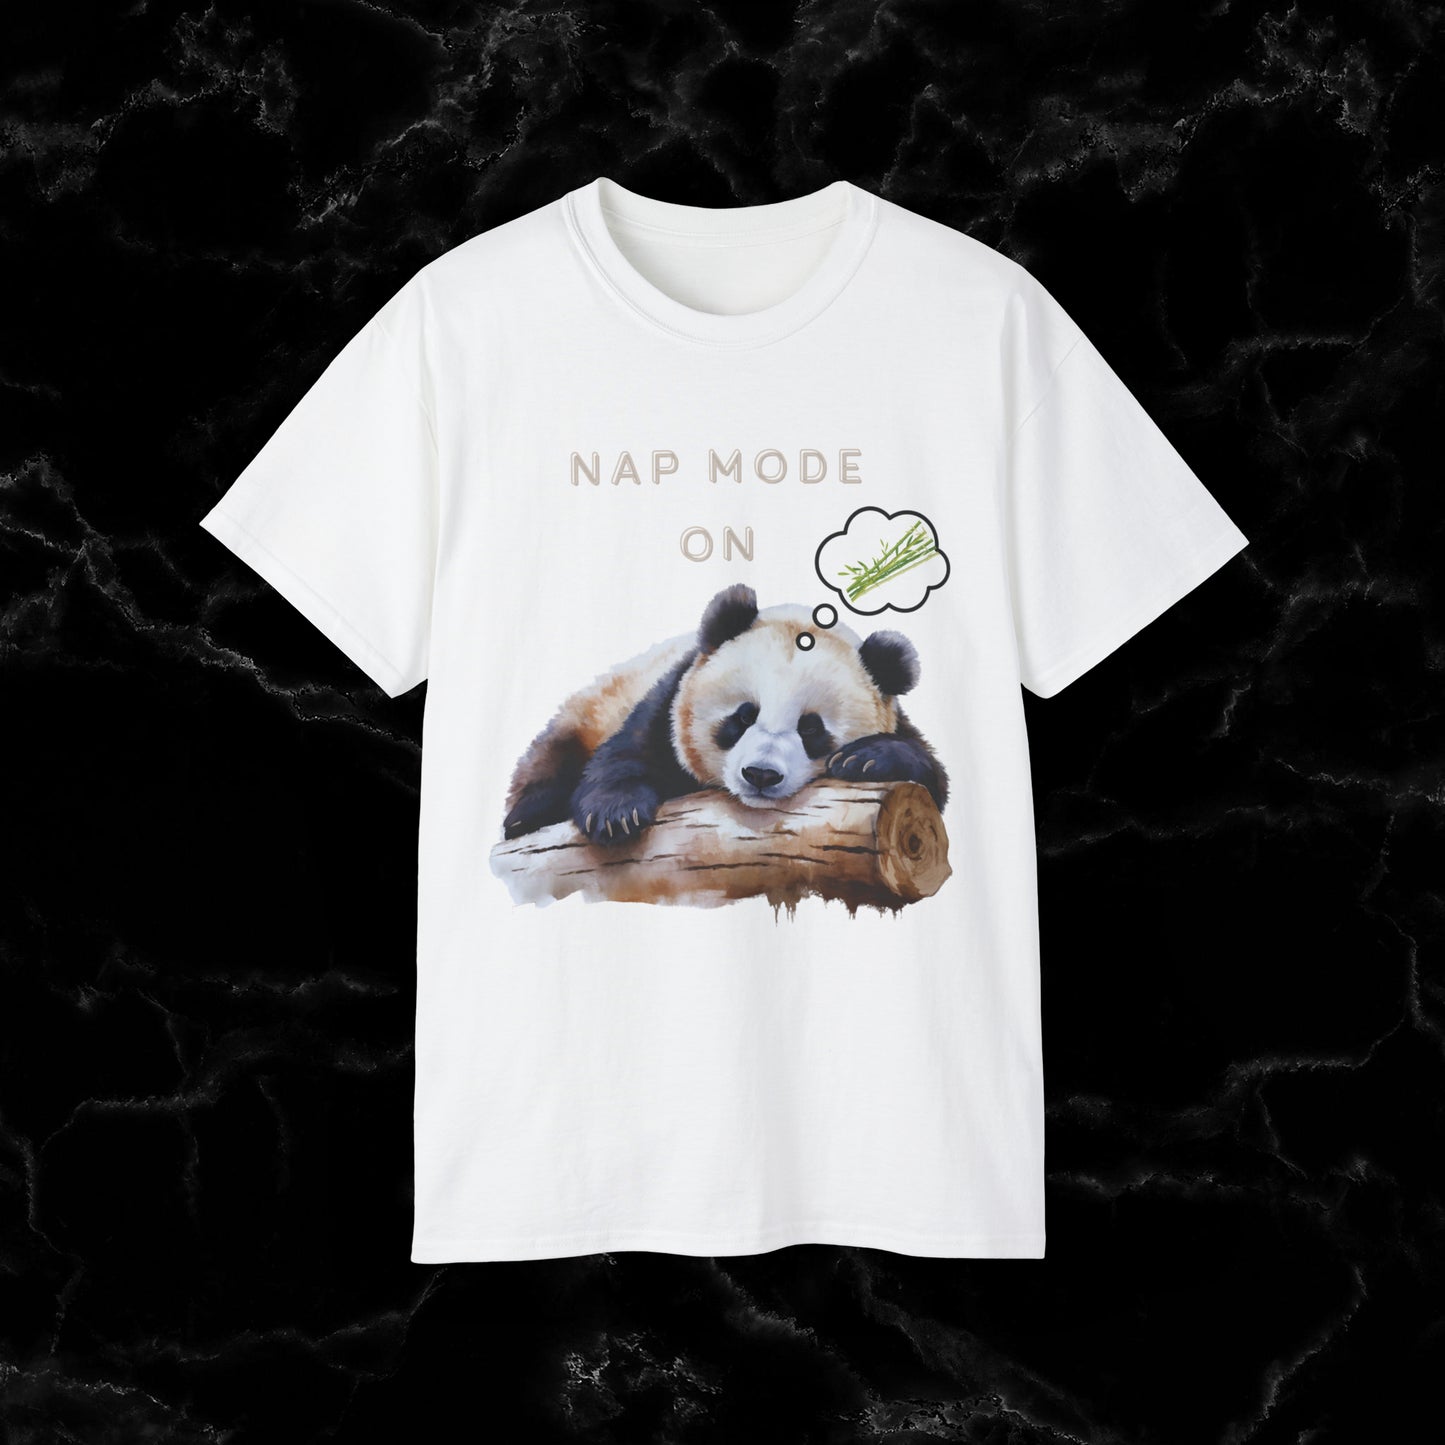 Nap Time Panda Unisex Funny Tee - Hilarious Panda Nap Mode On T-Shirt White S 